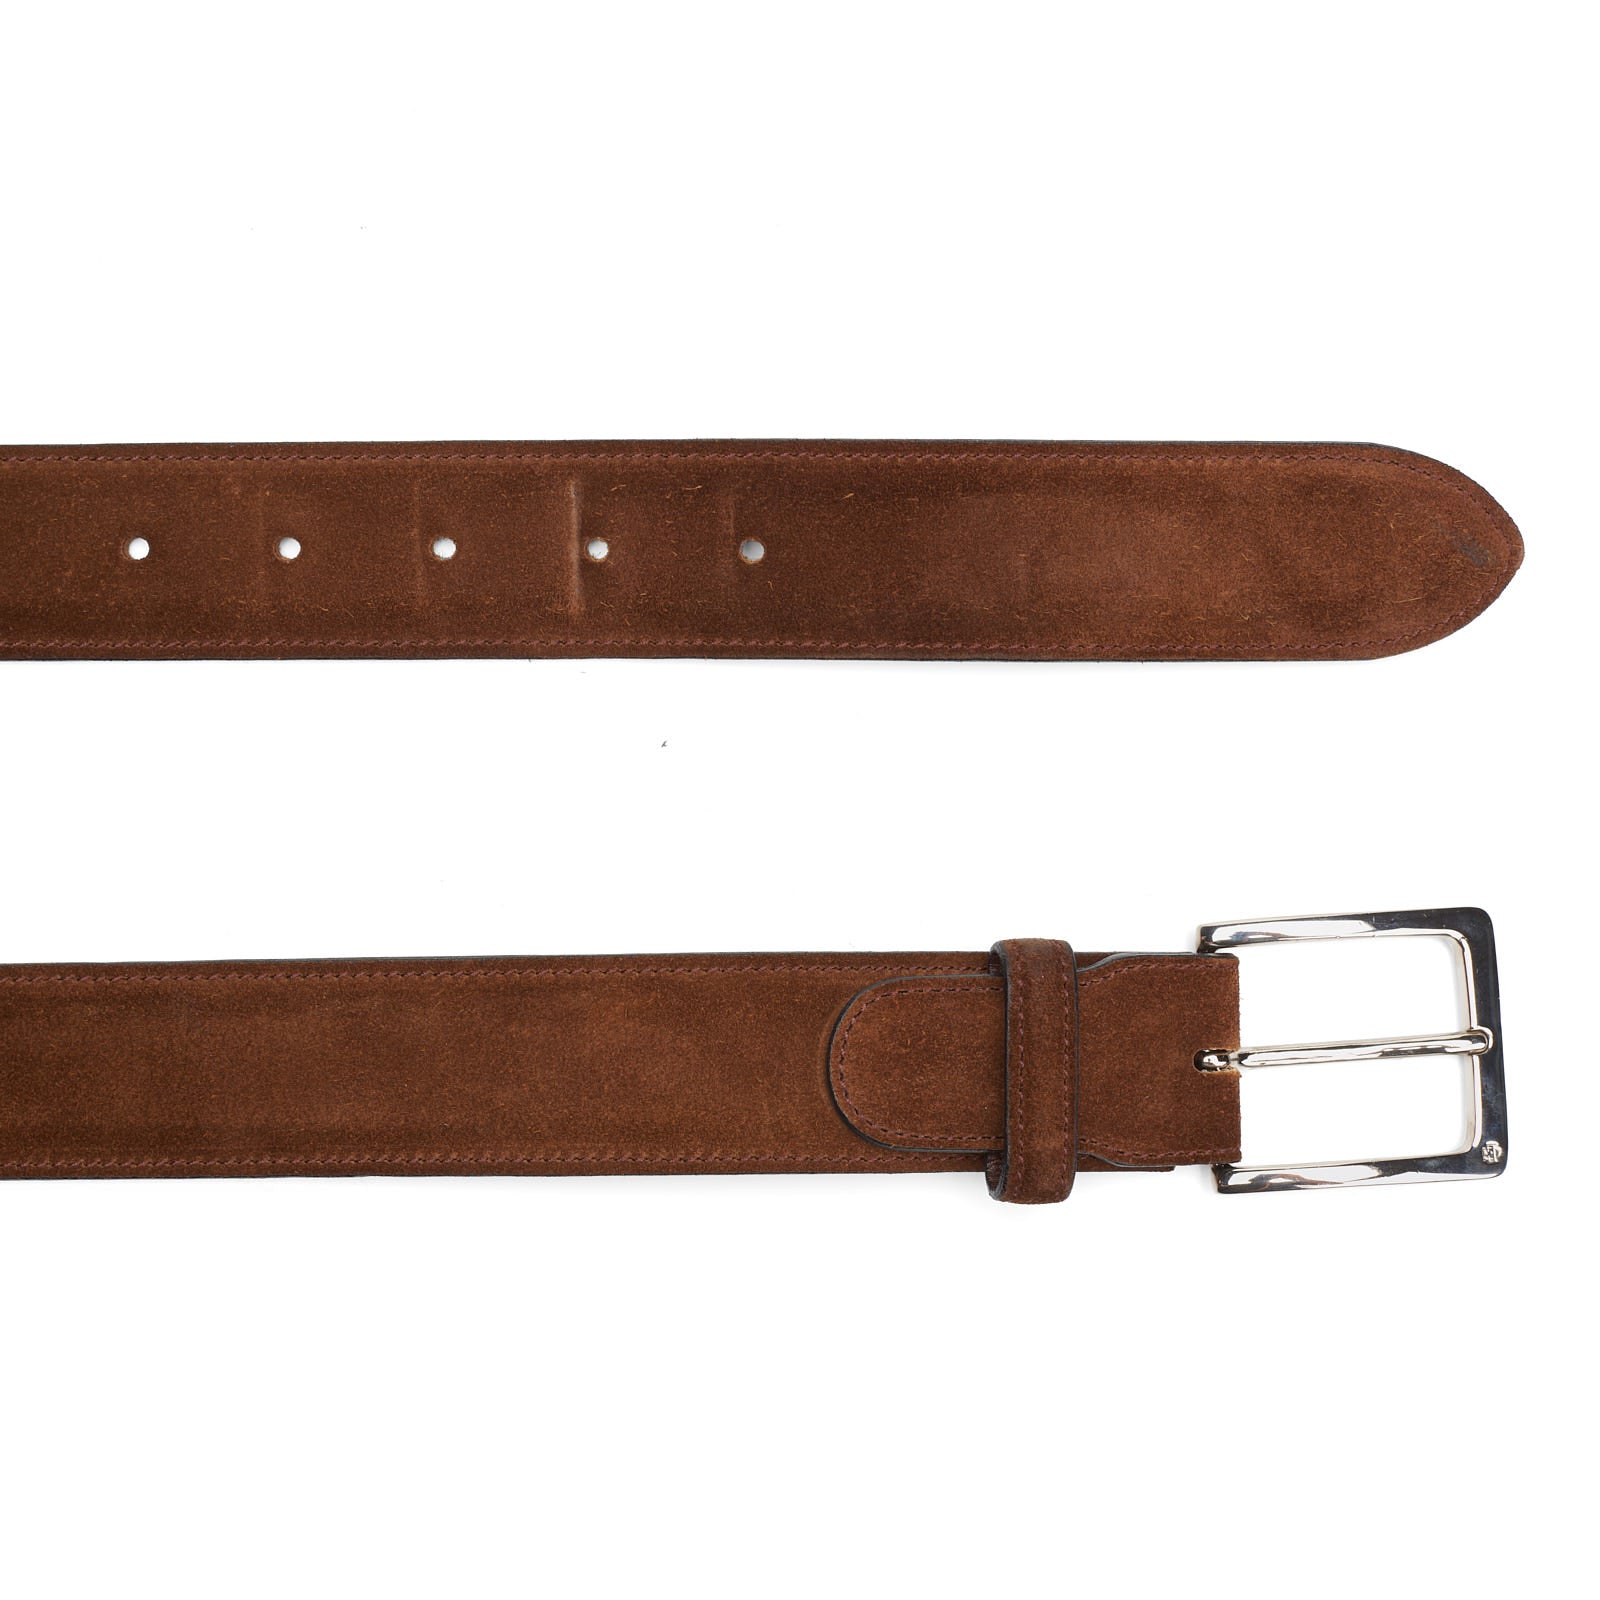 EDWARD GREEN Handmade Snuff Suede Leather Belt with Silver-Tone Buckle 90cm 36" EDWARD GREEN